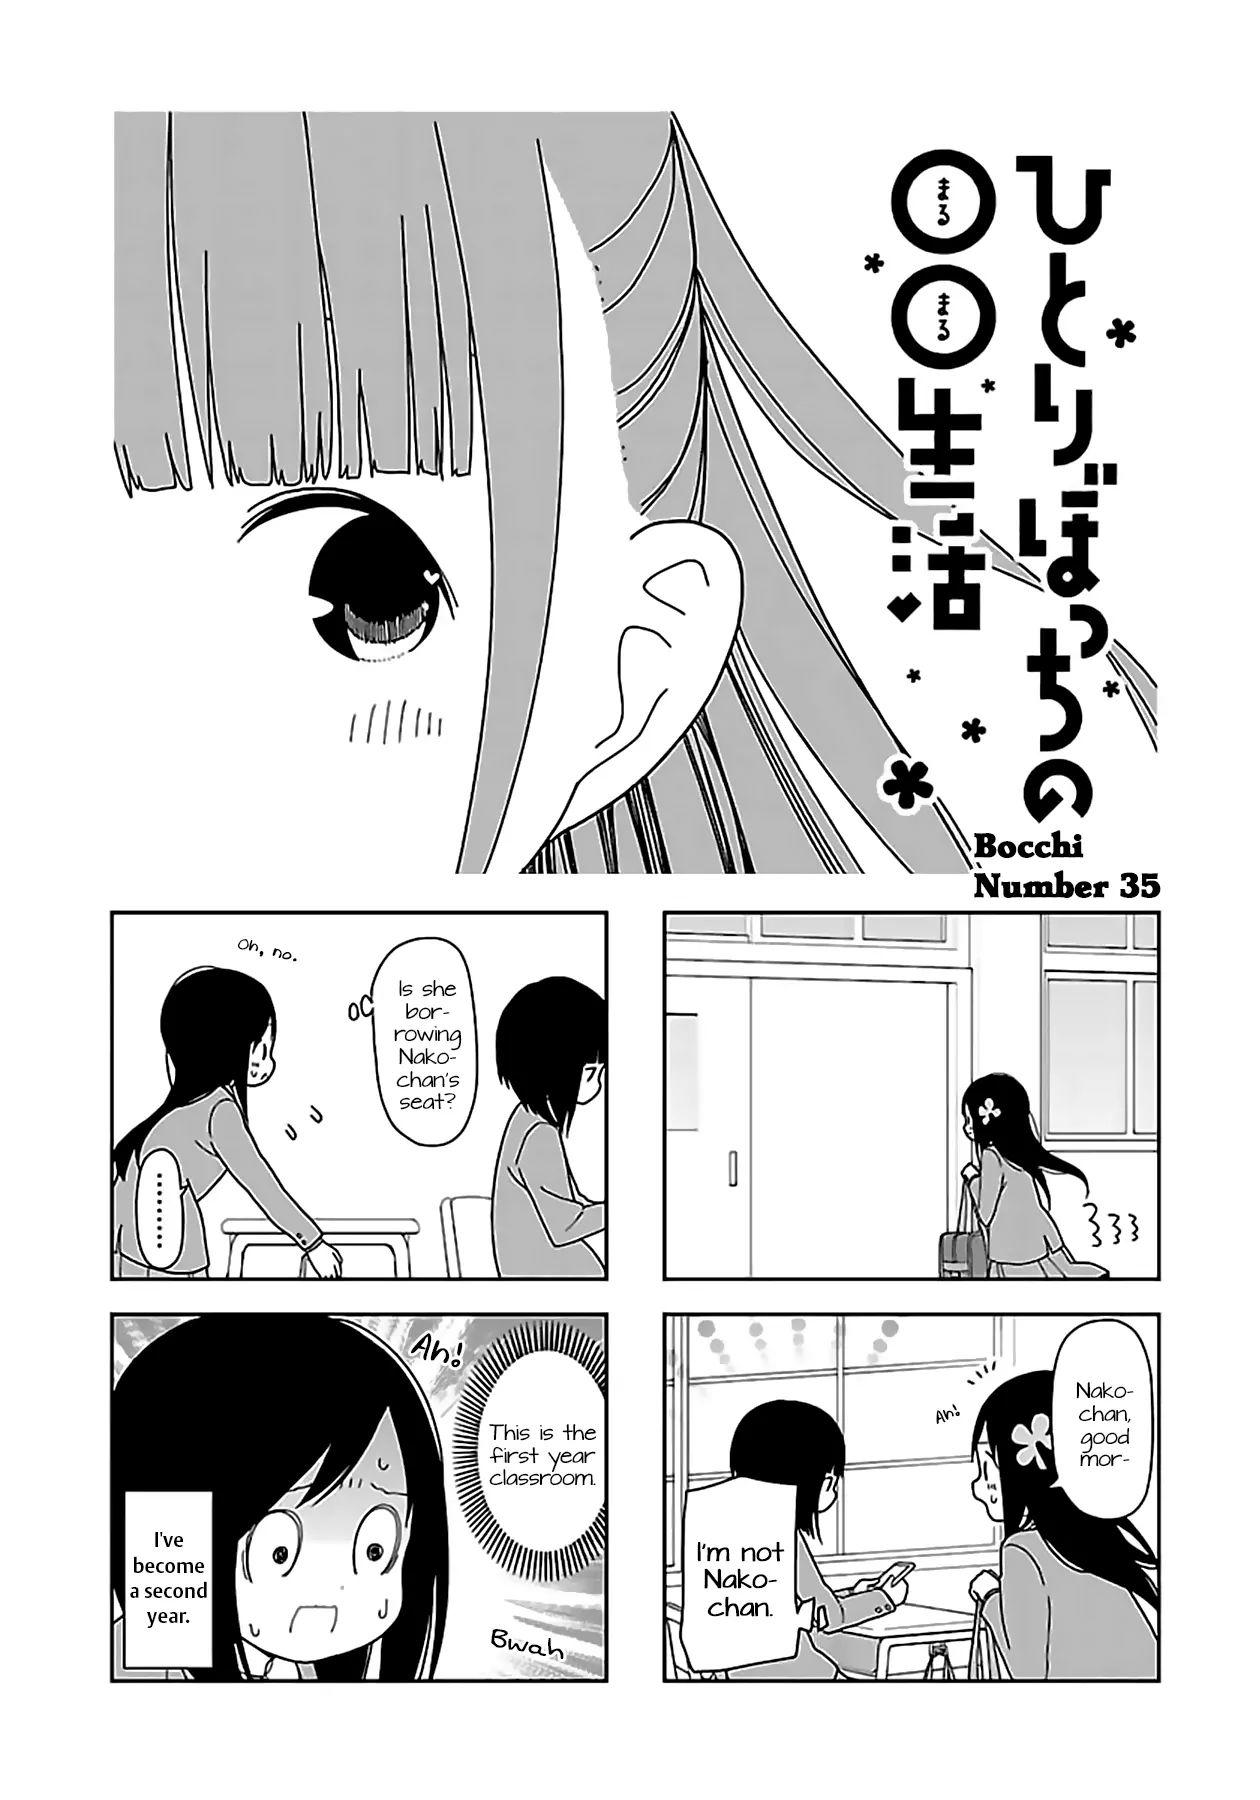 Read Hitoribocchi No Oo Seikatsu Manga on Mangakakalot